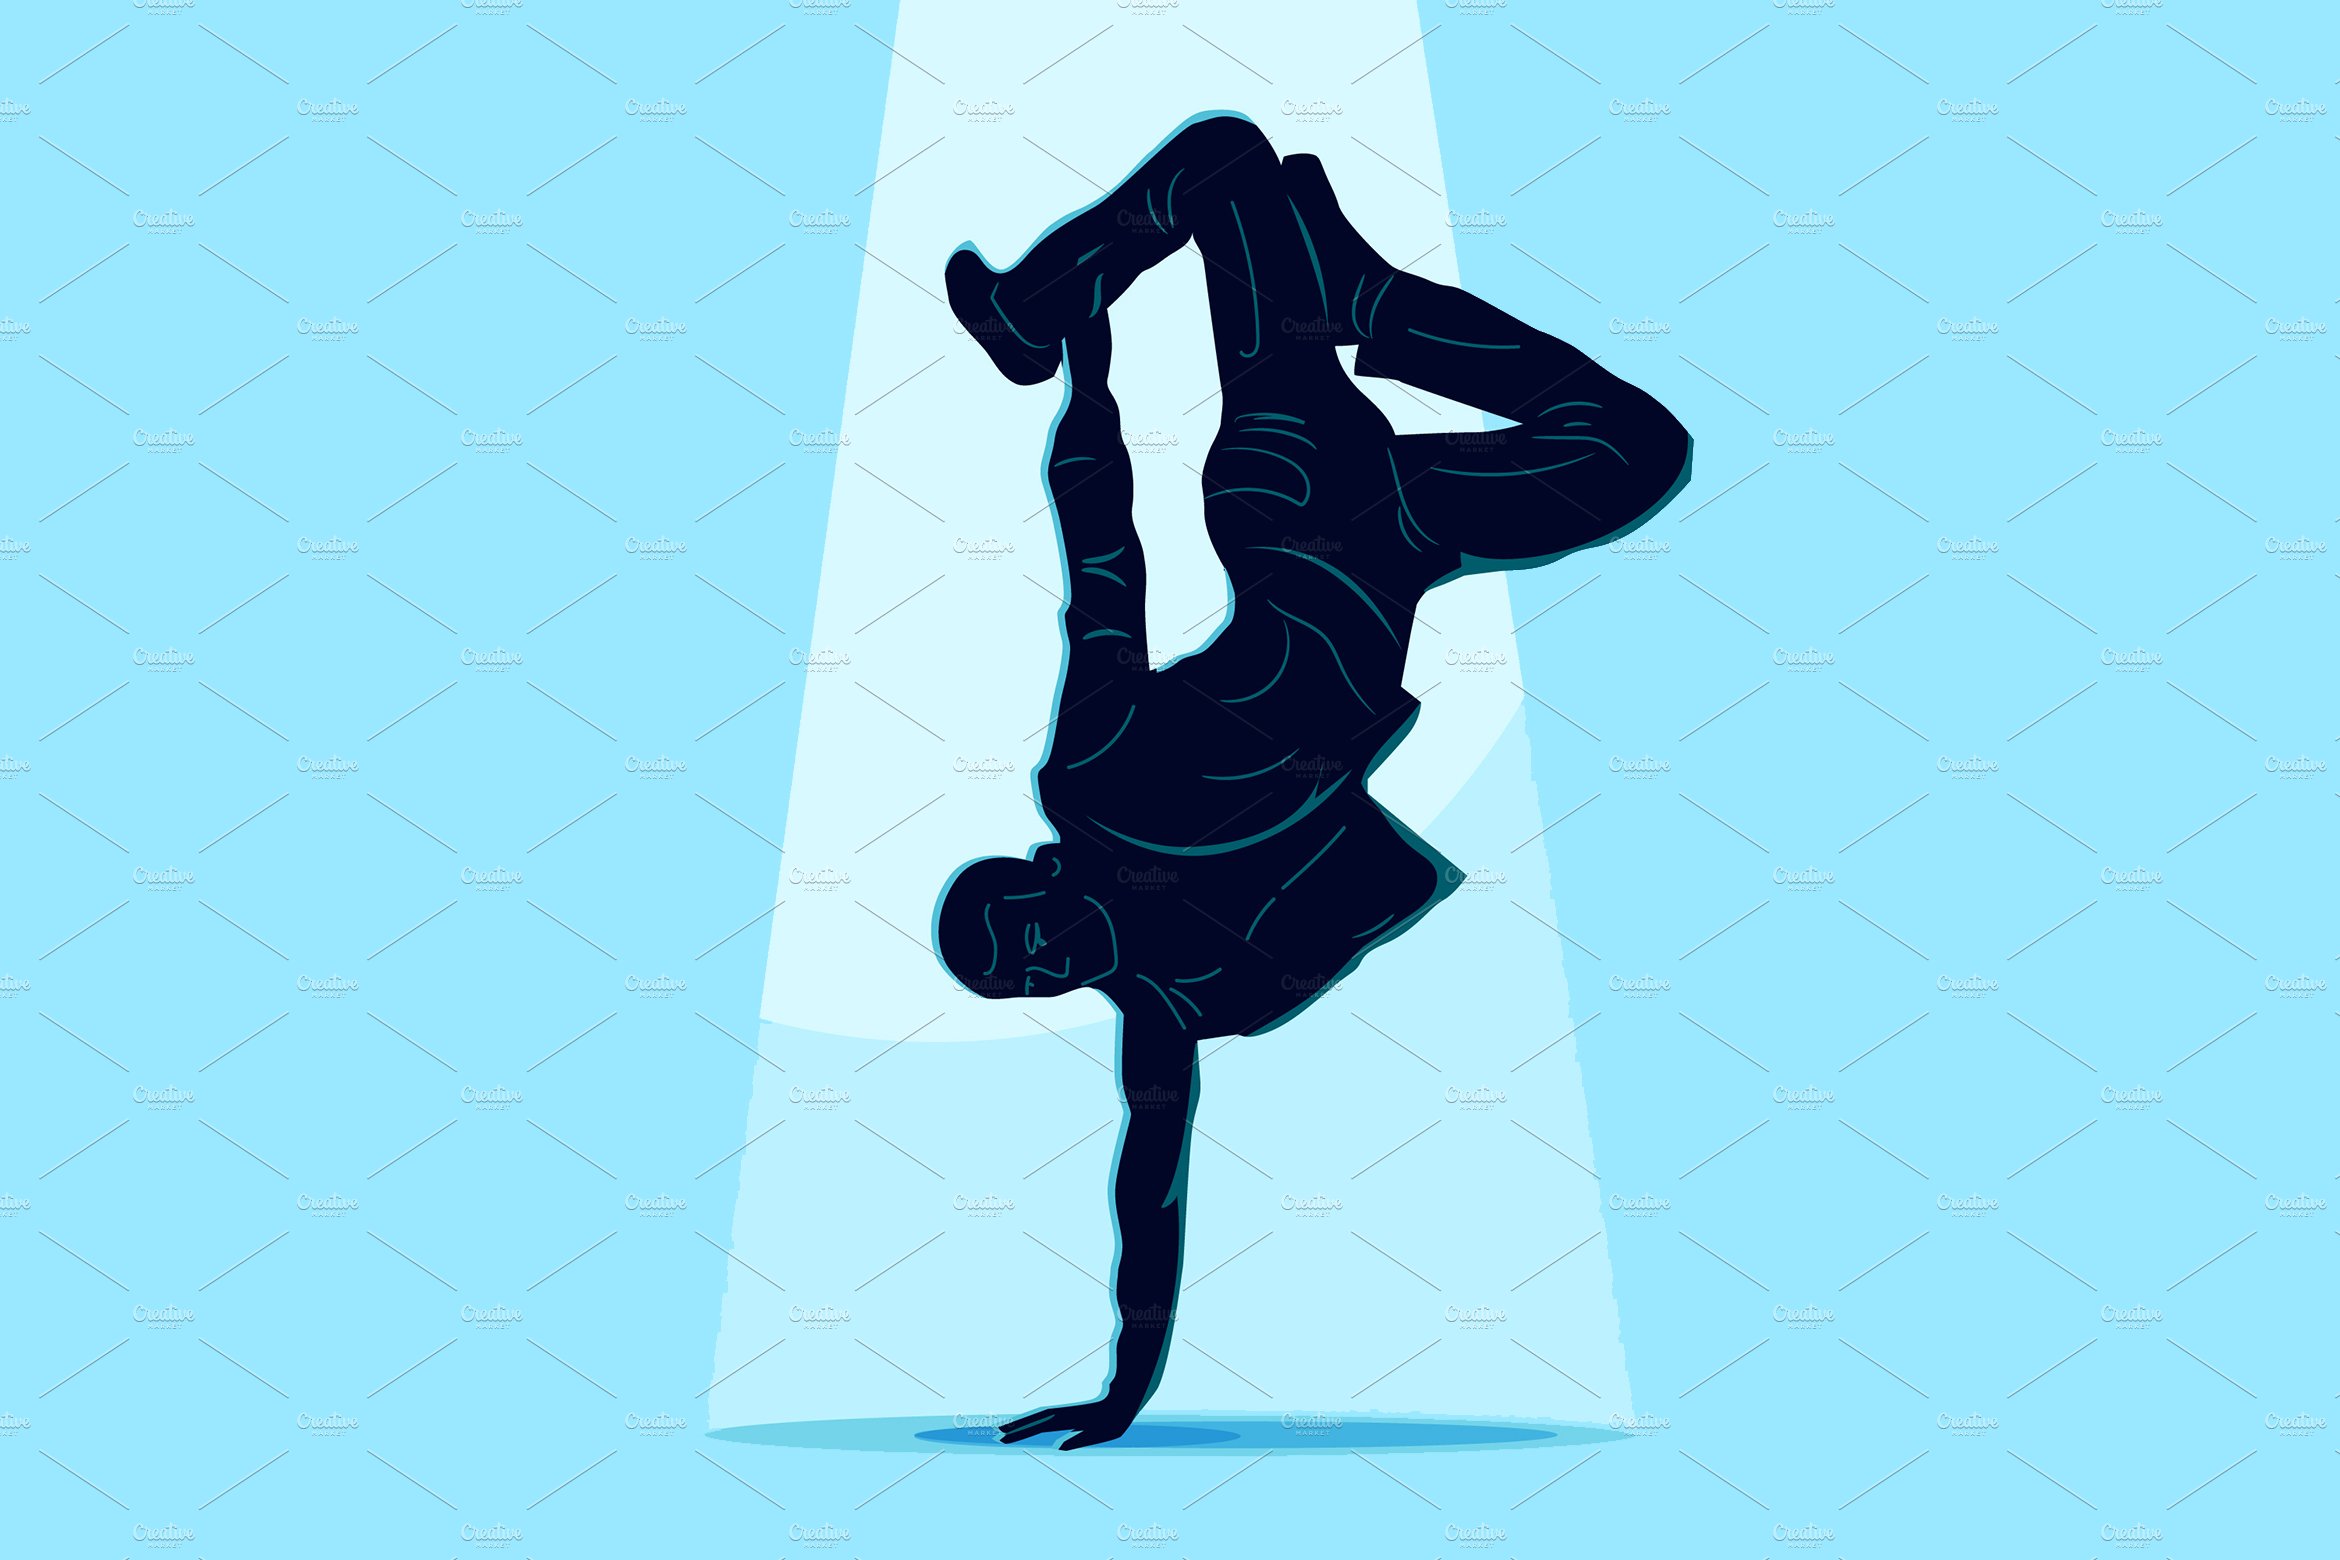 Male Dancer Silhouette cover image.